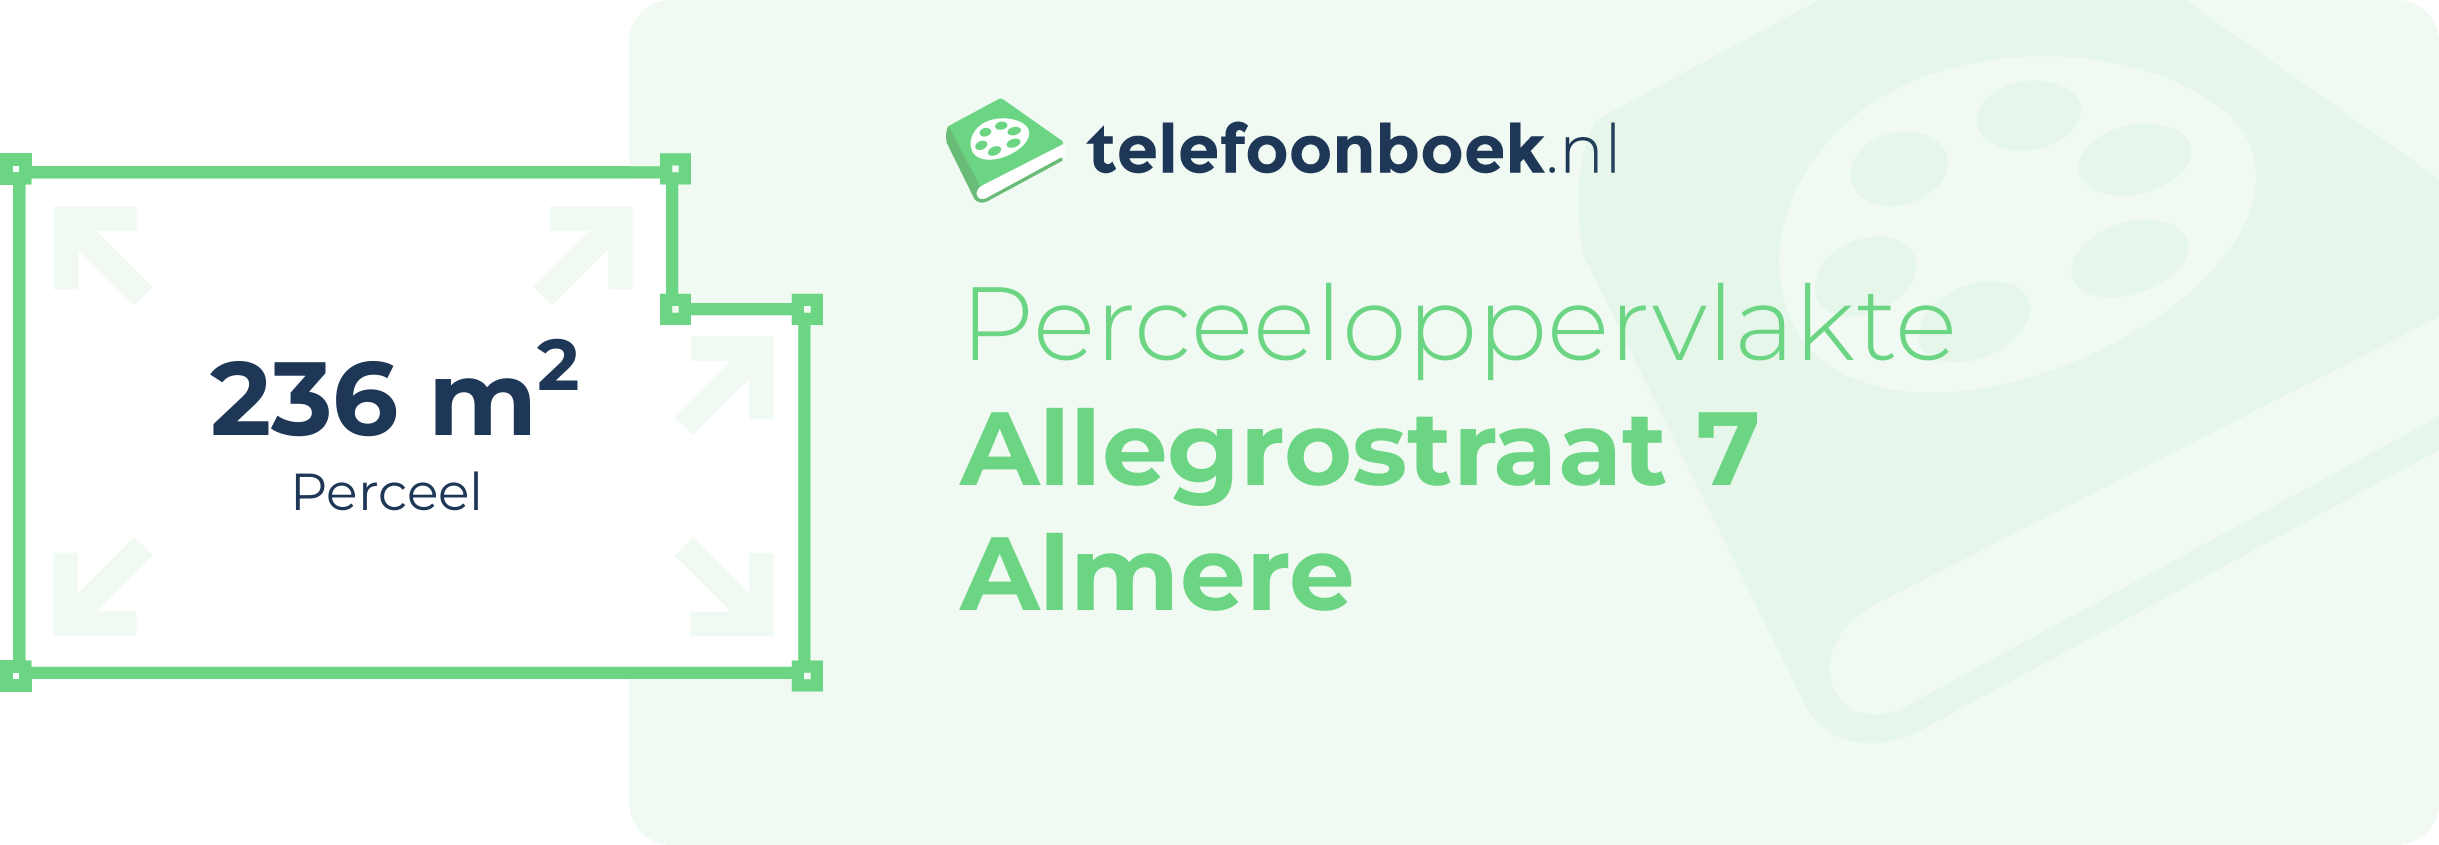 Perceeloppervlakte Allegrostraat 7 Almere